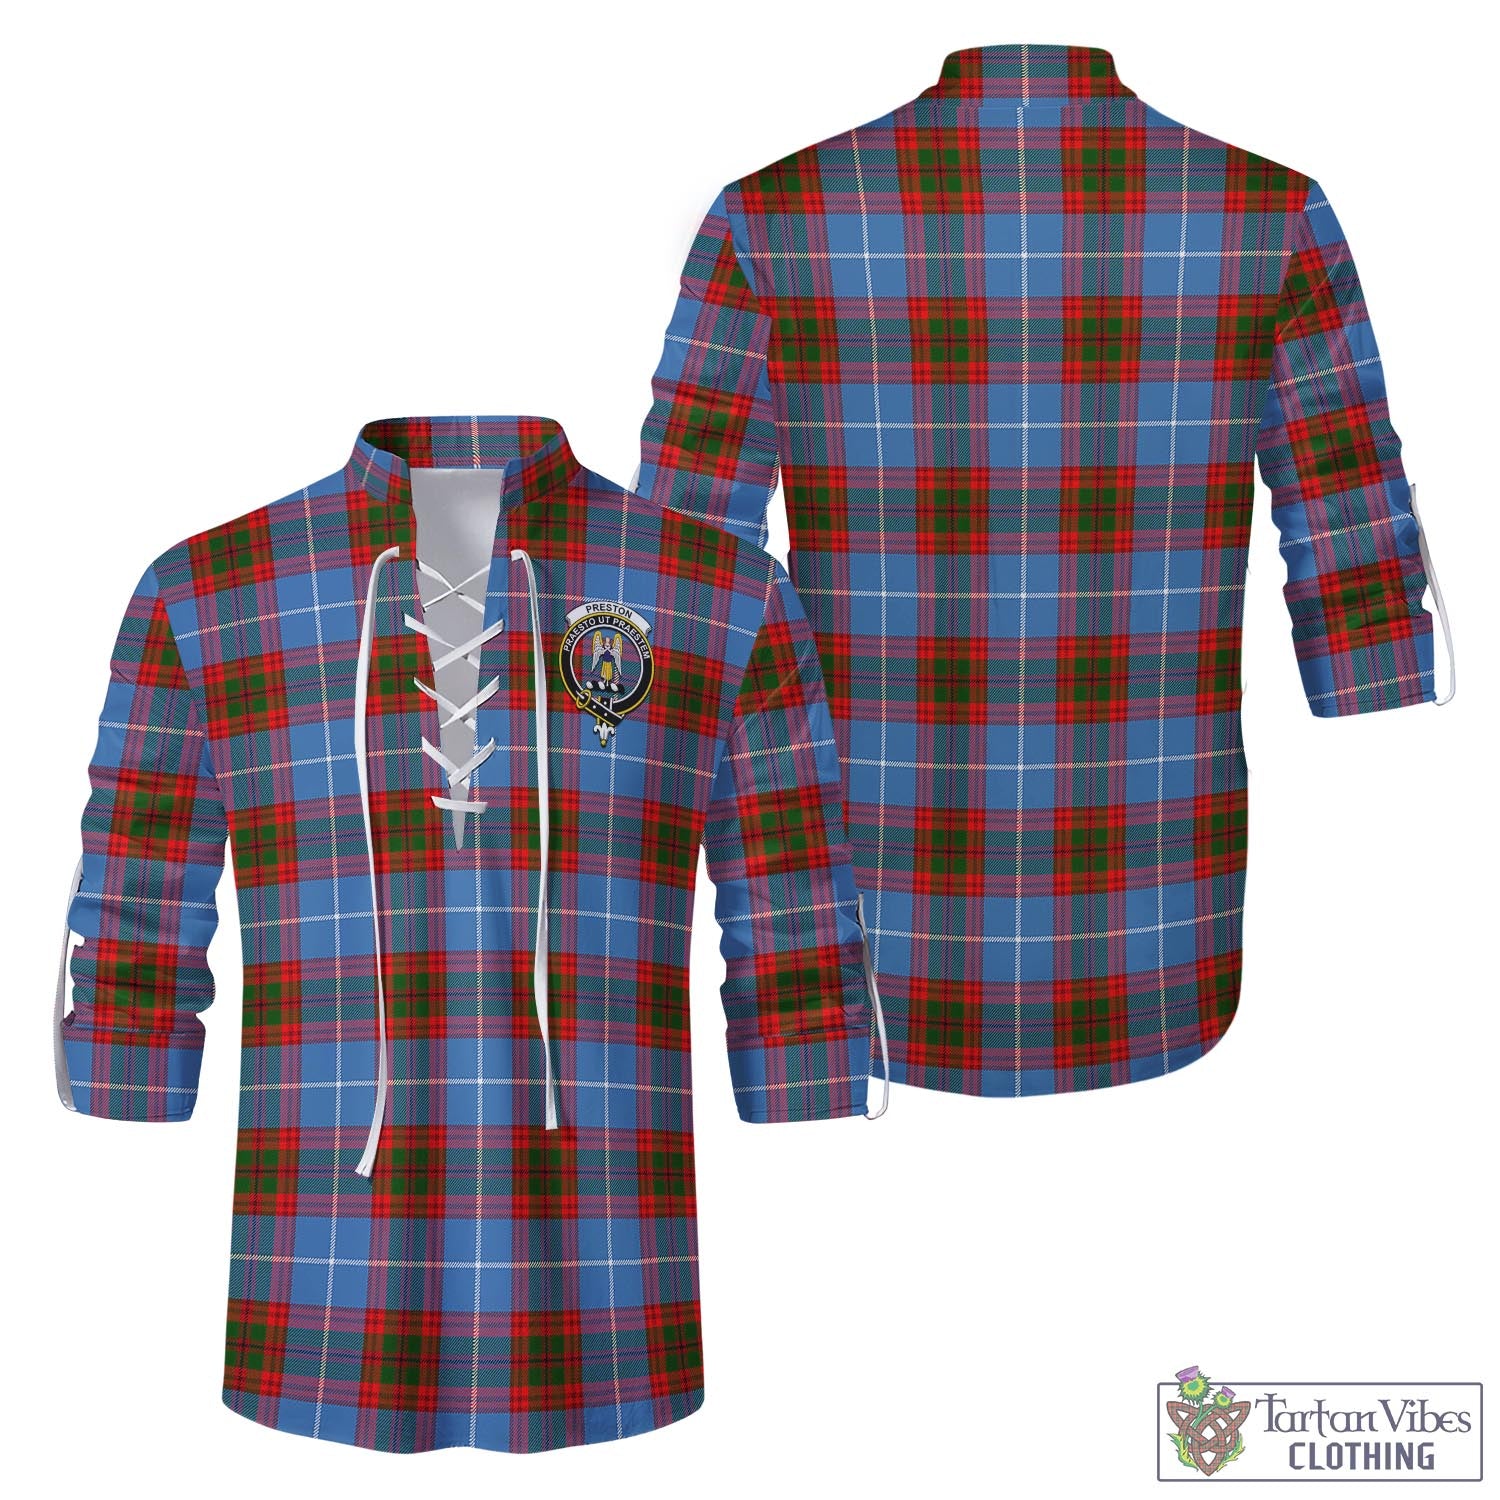 Tartan Vibes Clothing Preston Tartan Men's Scottish Traditional Jacobite Ghillie Kilt Shirt with Family Crest